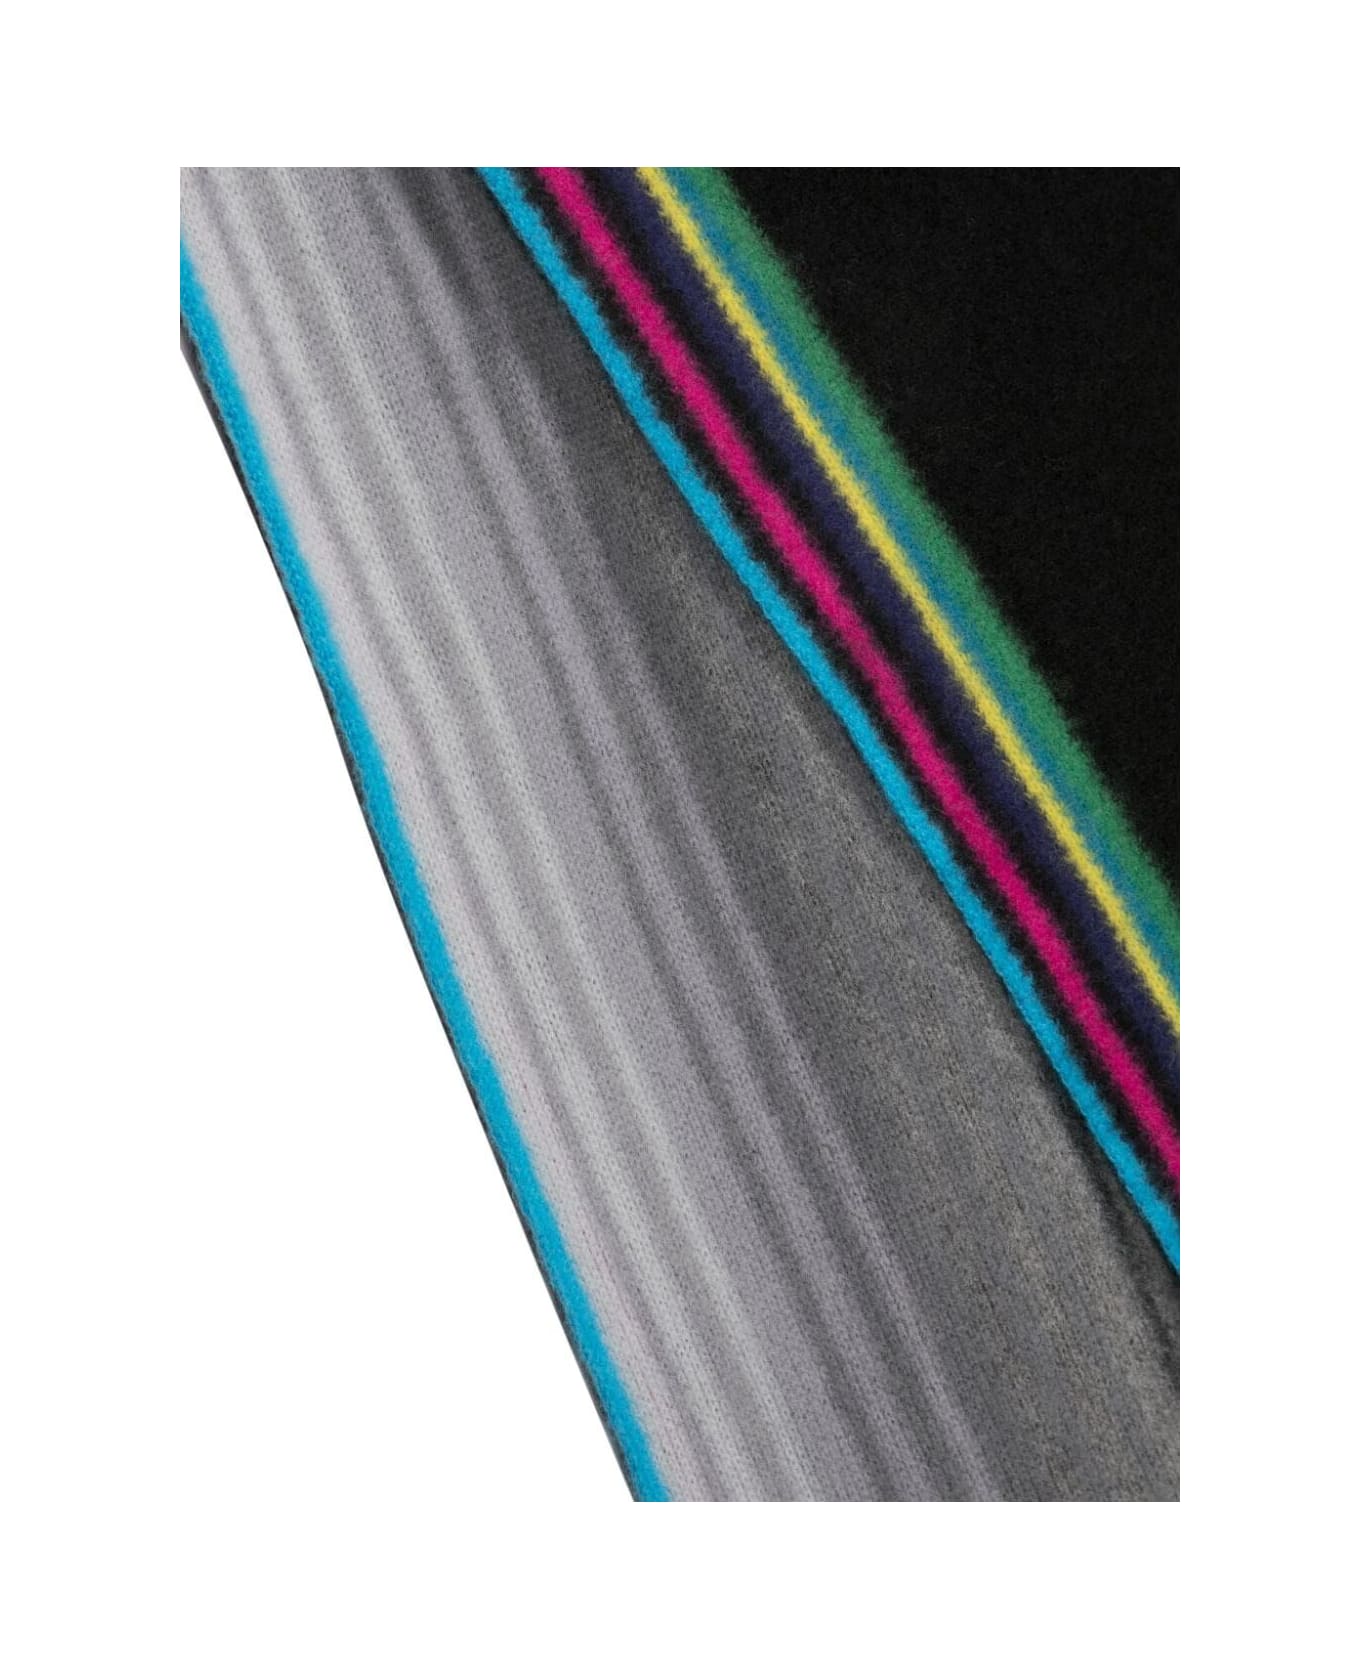 PS by Paul Smith Men Scarf Reversible Stripes - Black スカーフ